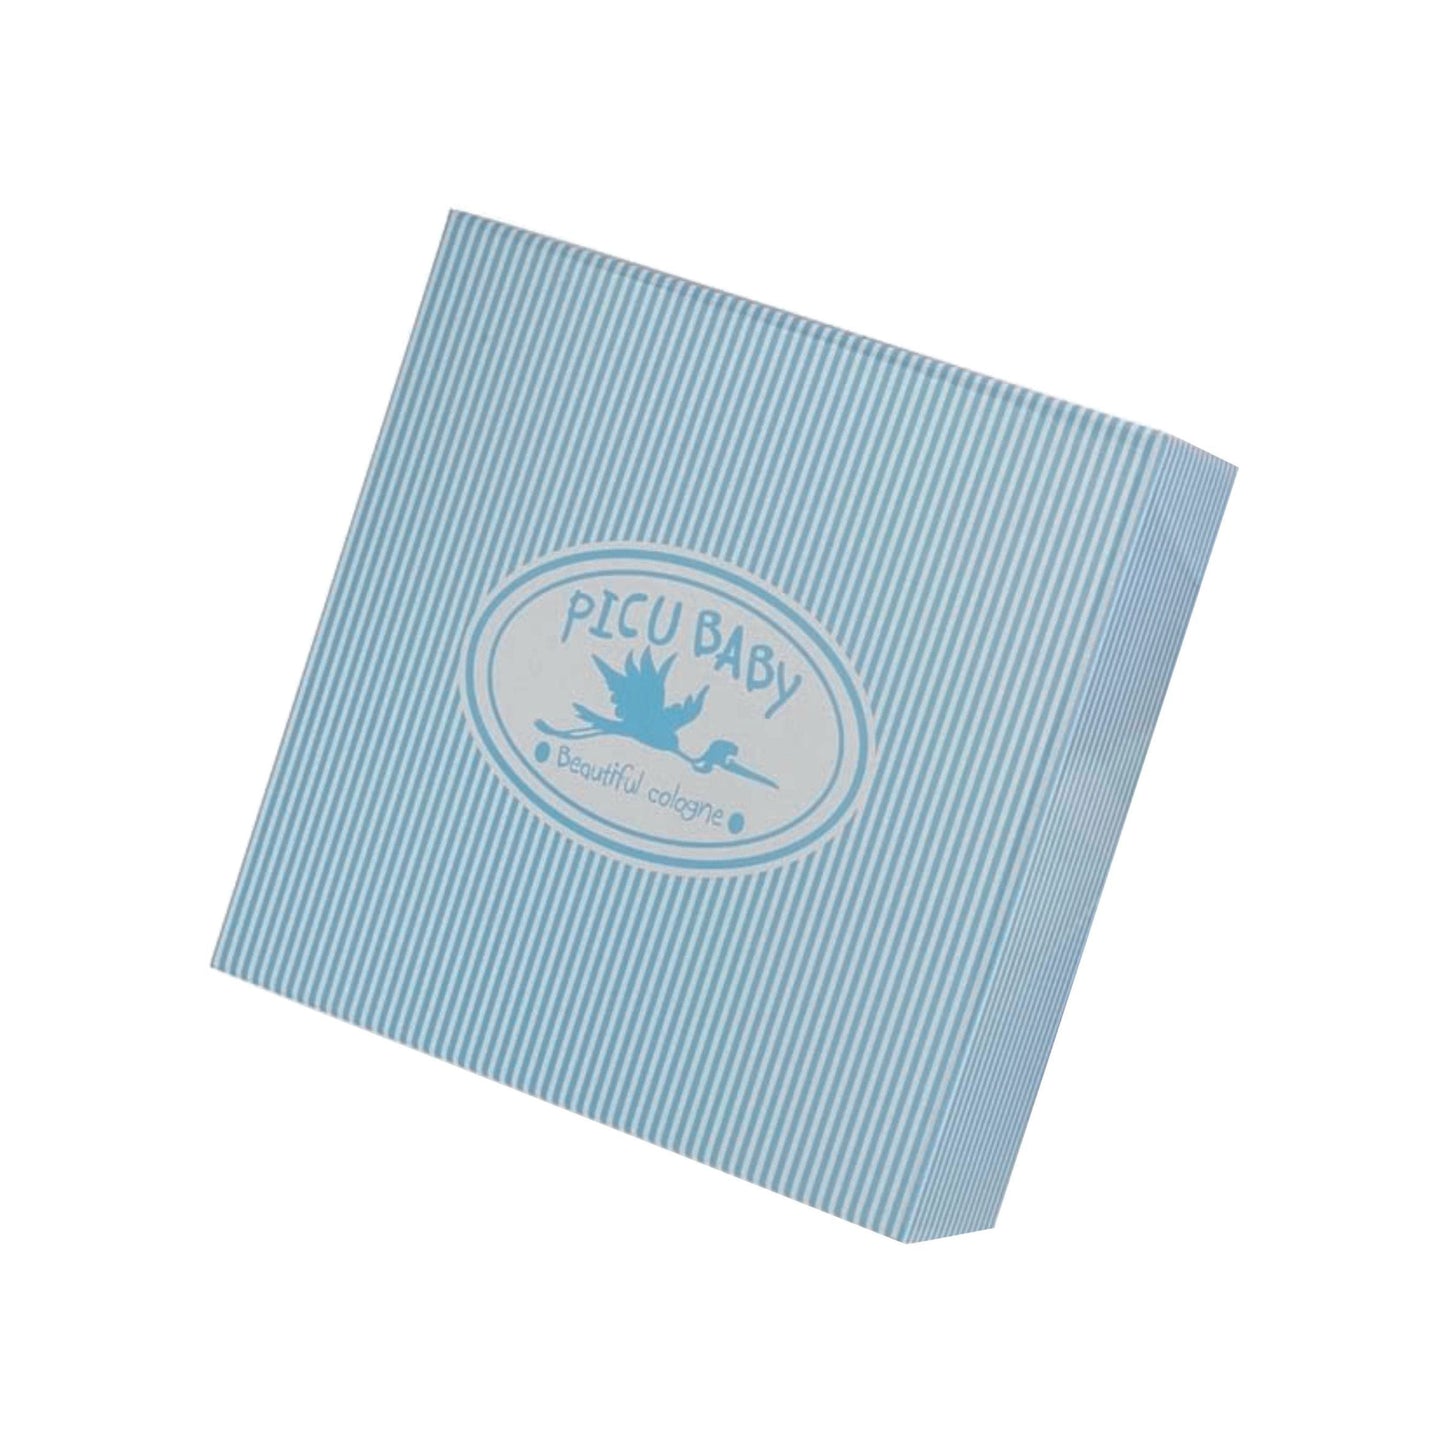 PICU Baby | Blue Striped Gift Box